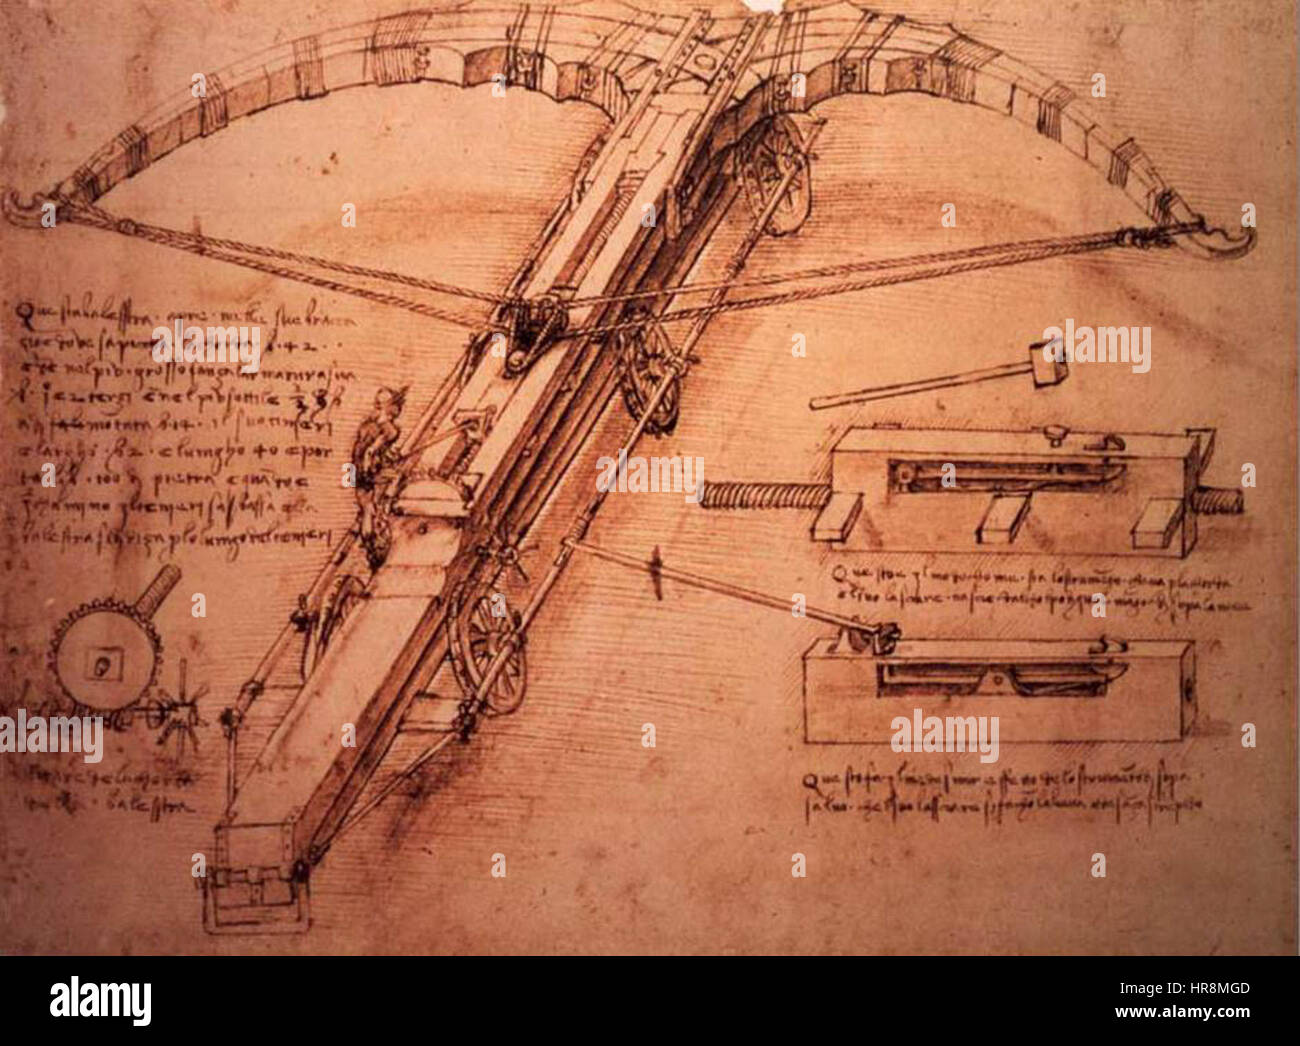 Vinci, Leonardo da - Crossbow sketch - 1500 Stock Photo - Alamy